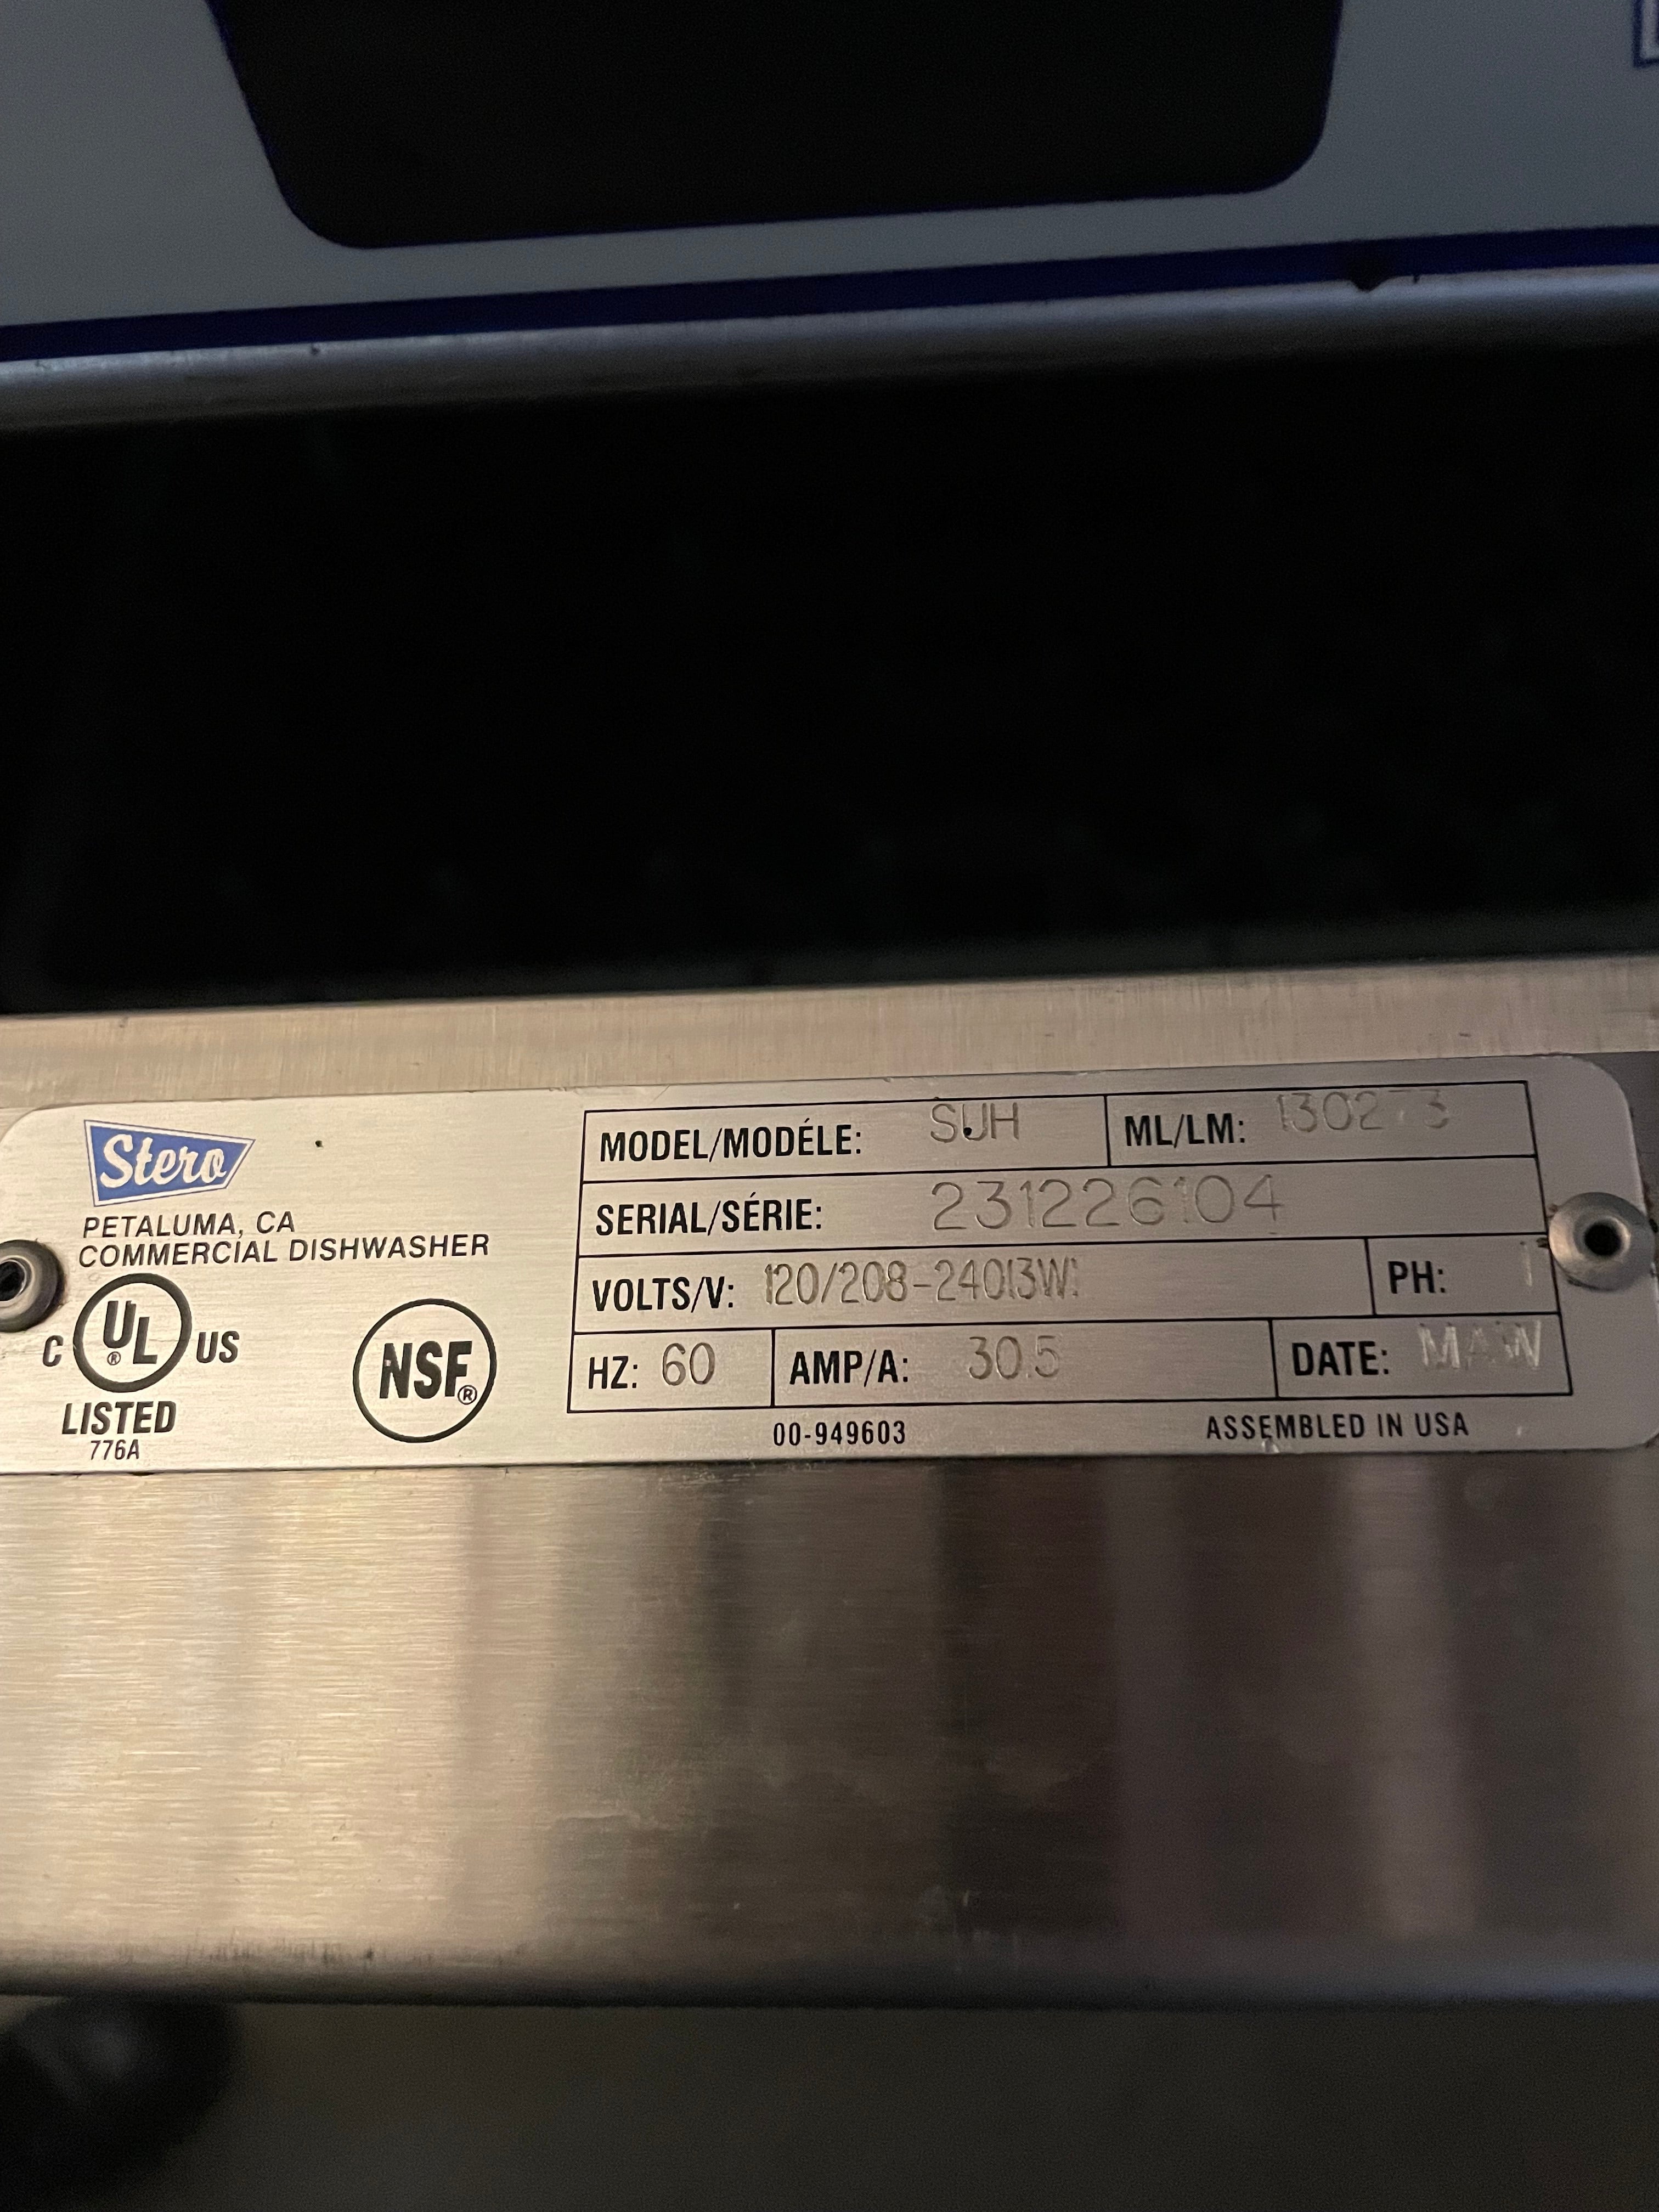 Thumbnail - Stero SUH-130238 Undercounter Dishwasher